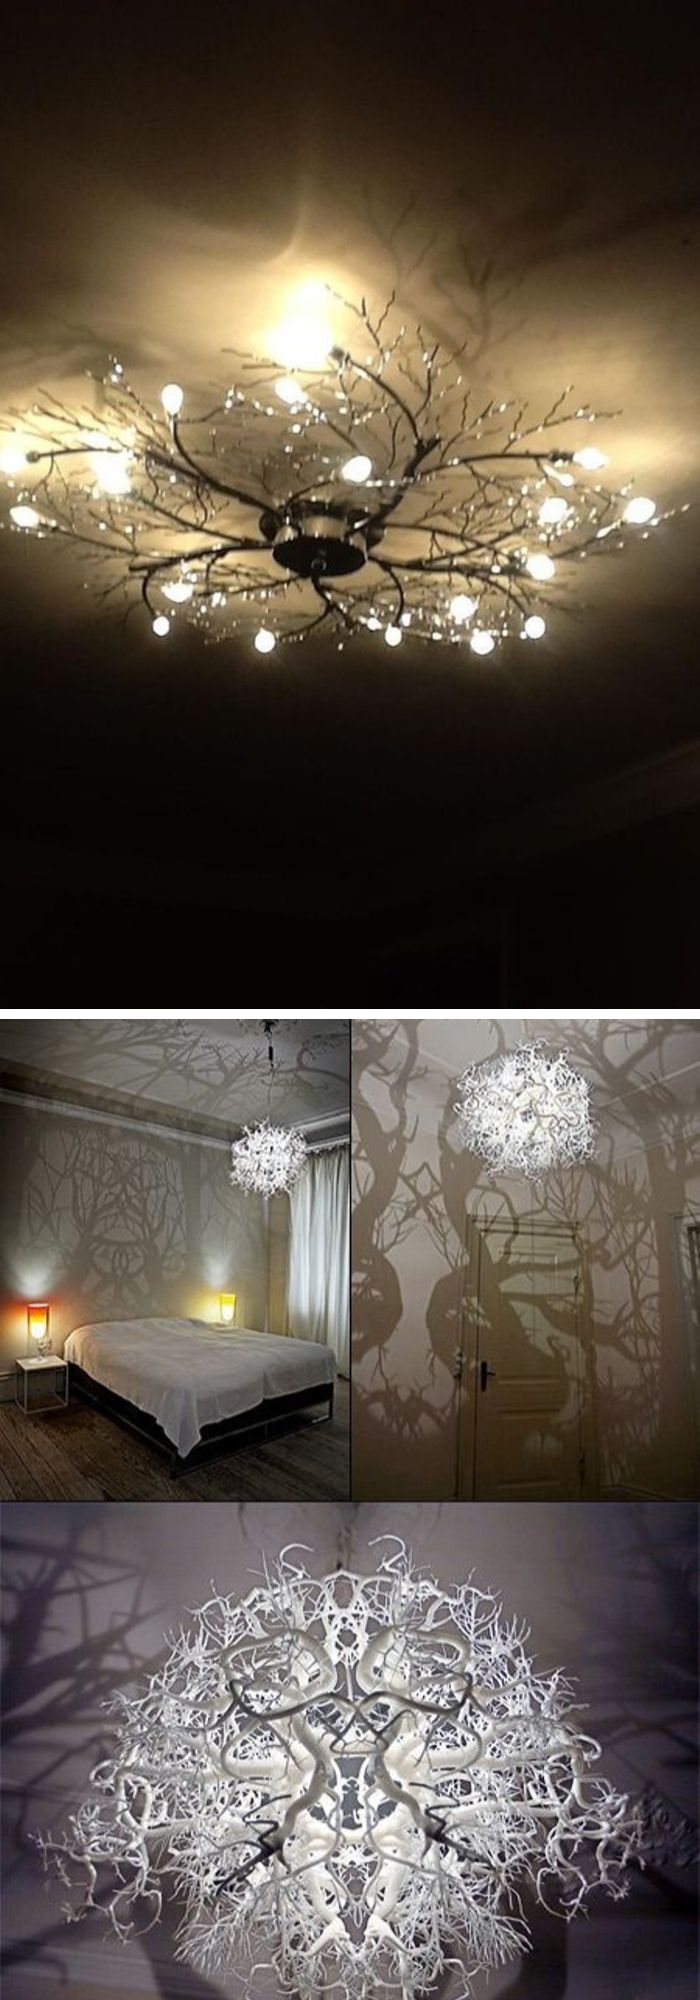 5 bedroom lighting ideas